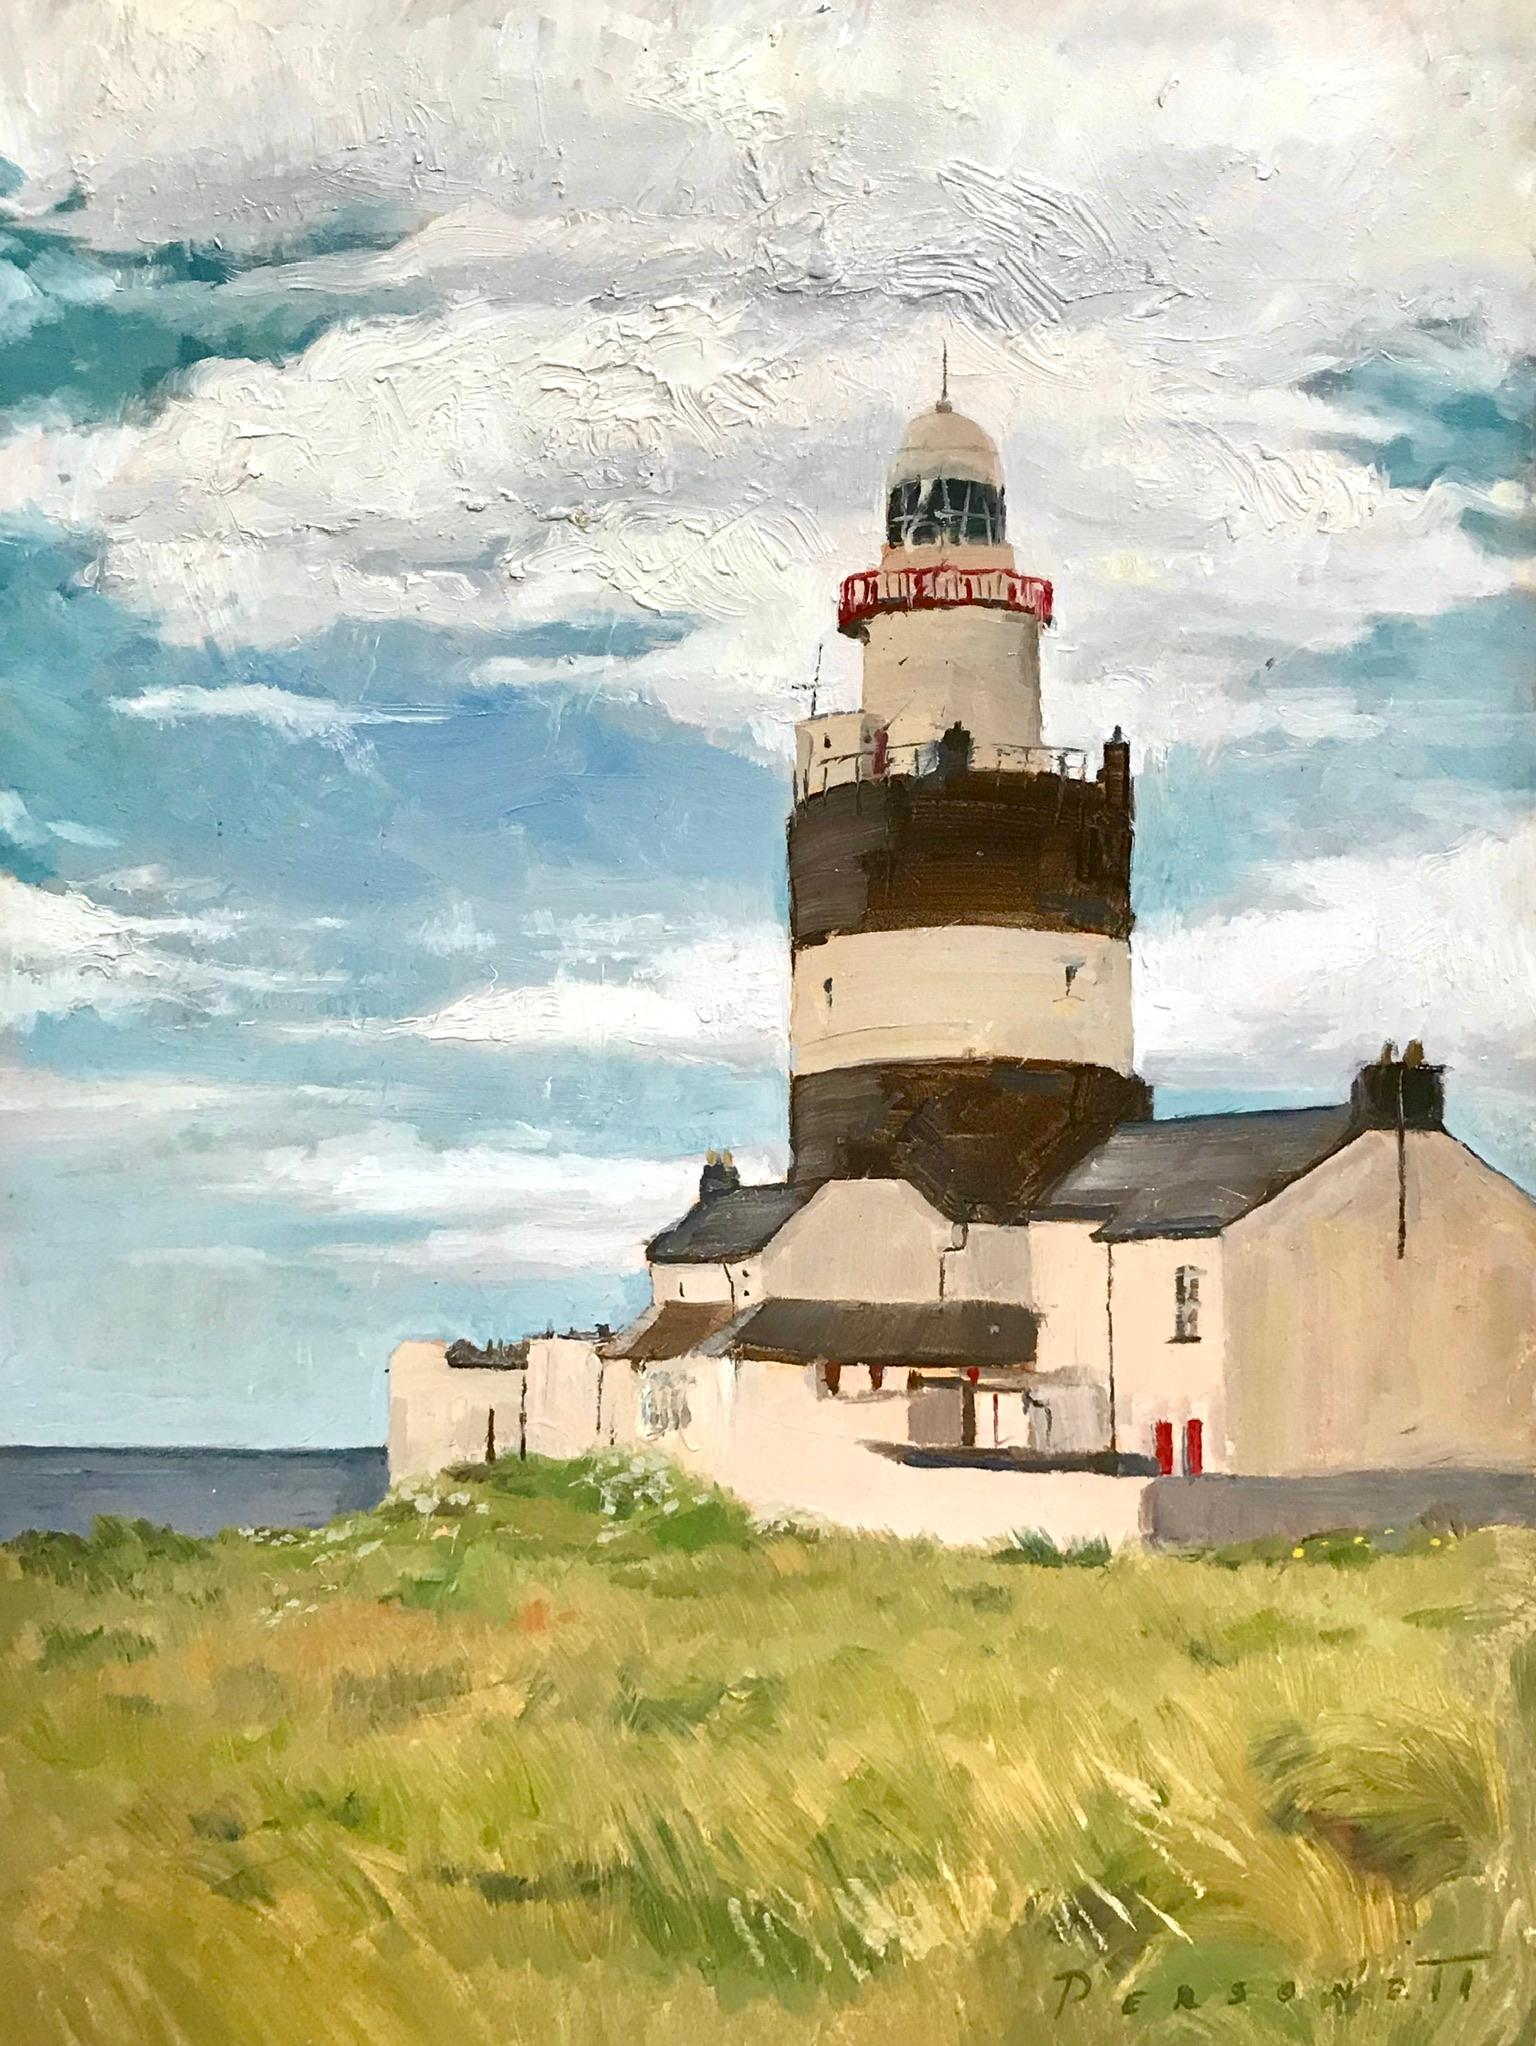 Rachel Personett Figurative Painting - "Hook Head Lighthouse" contemporary realist oil painting, Ireland landmark